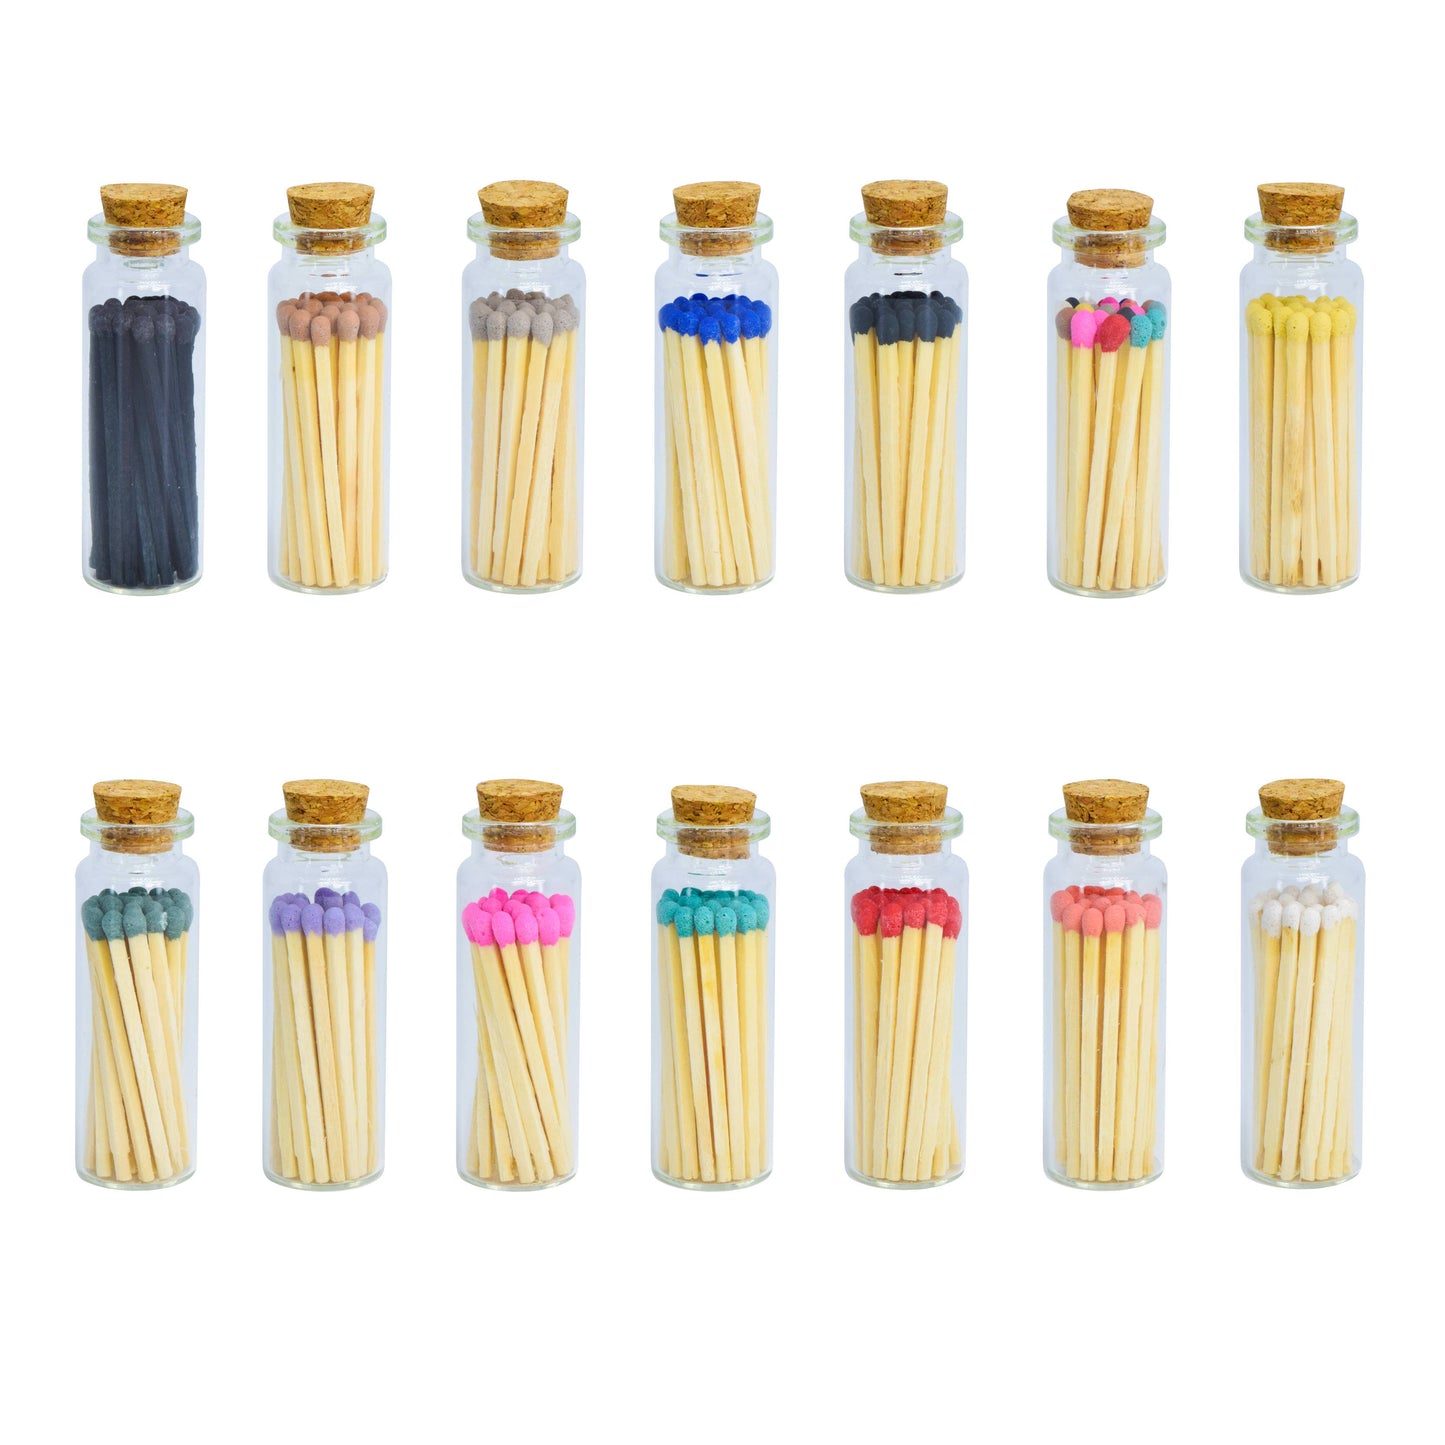 Small Match Bottles - Safety Matches in Jars with Striker: 20 Matchsticks Jar